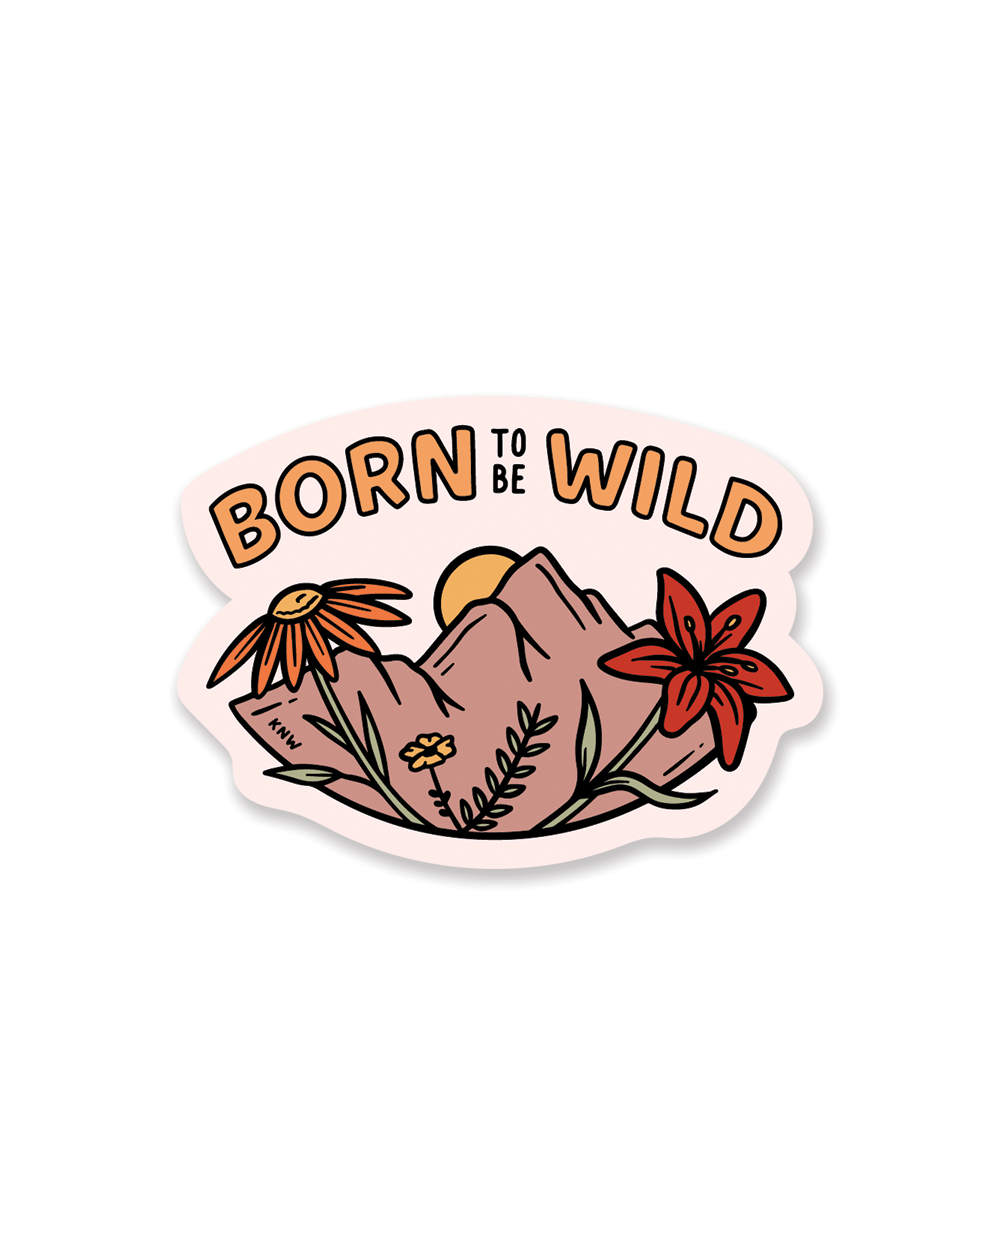 Born to be wild desert flowers sticker by Keep Nature Wild